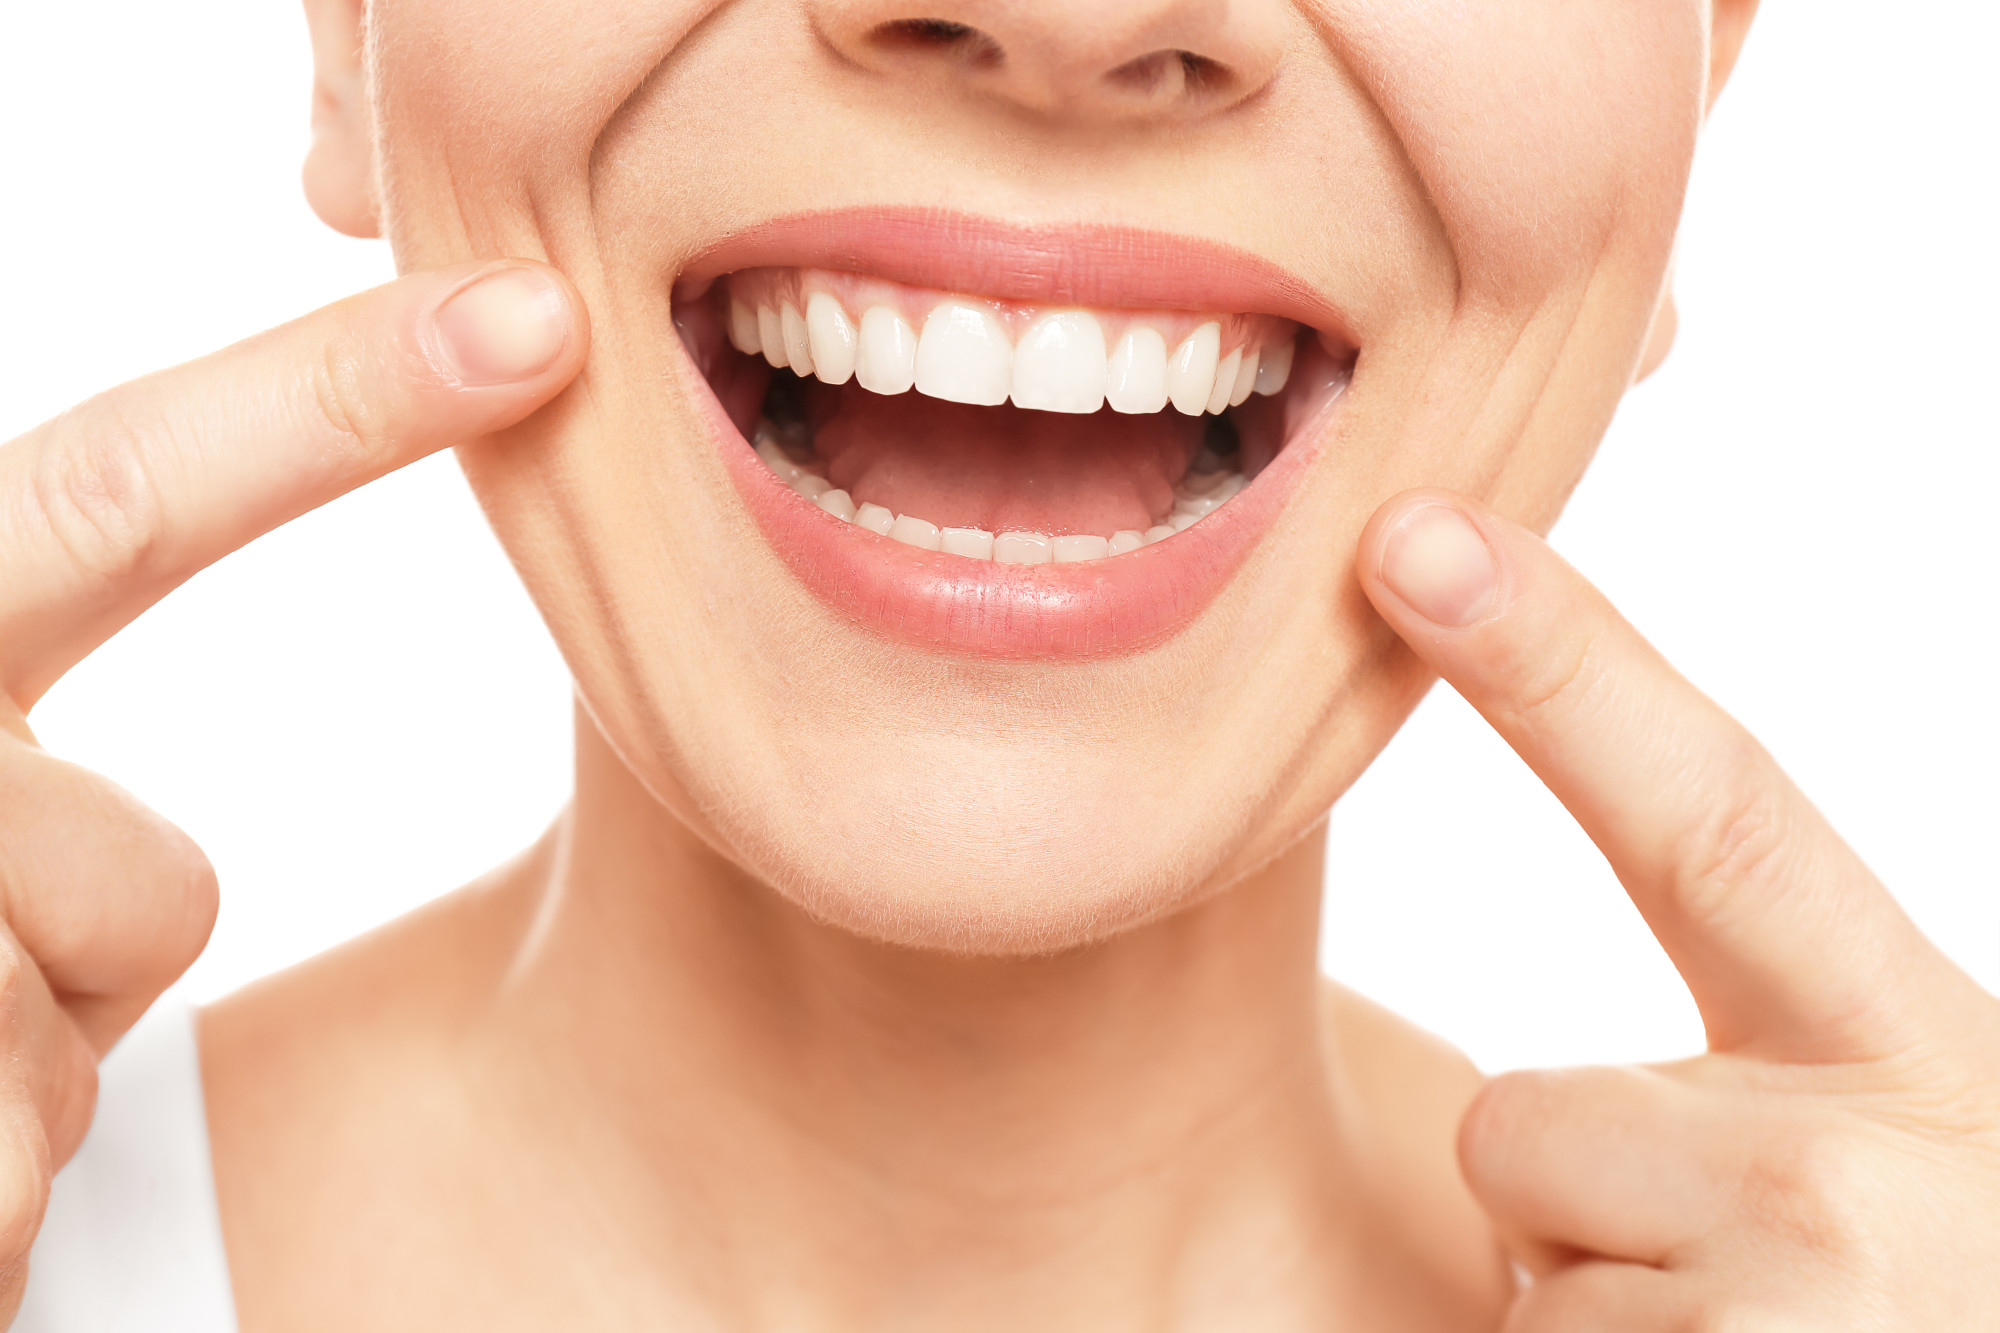 7 Incredible Health Benefits of Having Straight Teeth